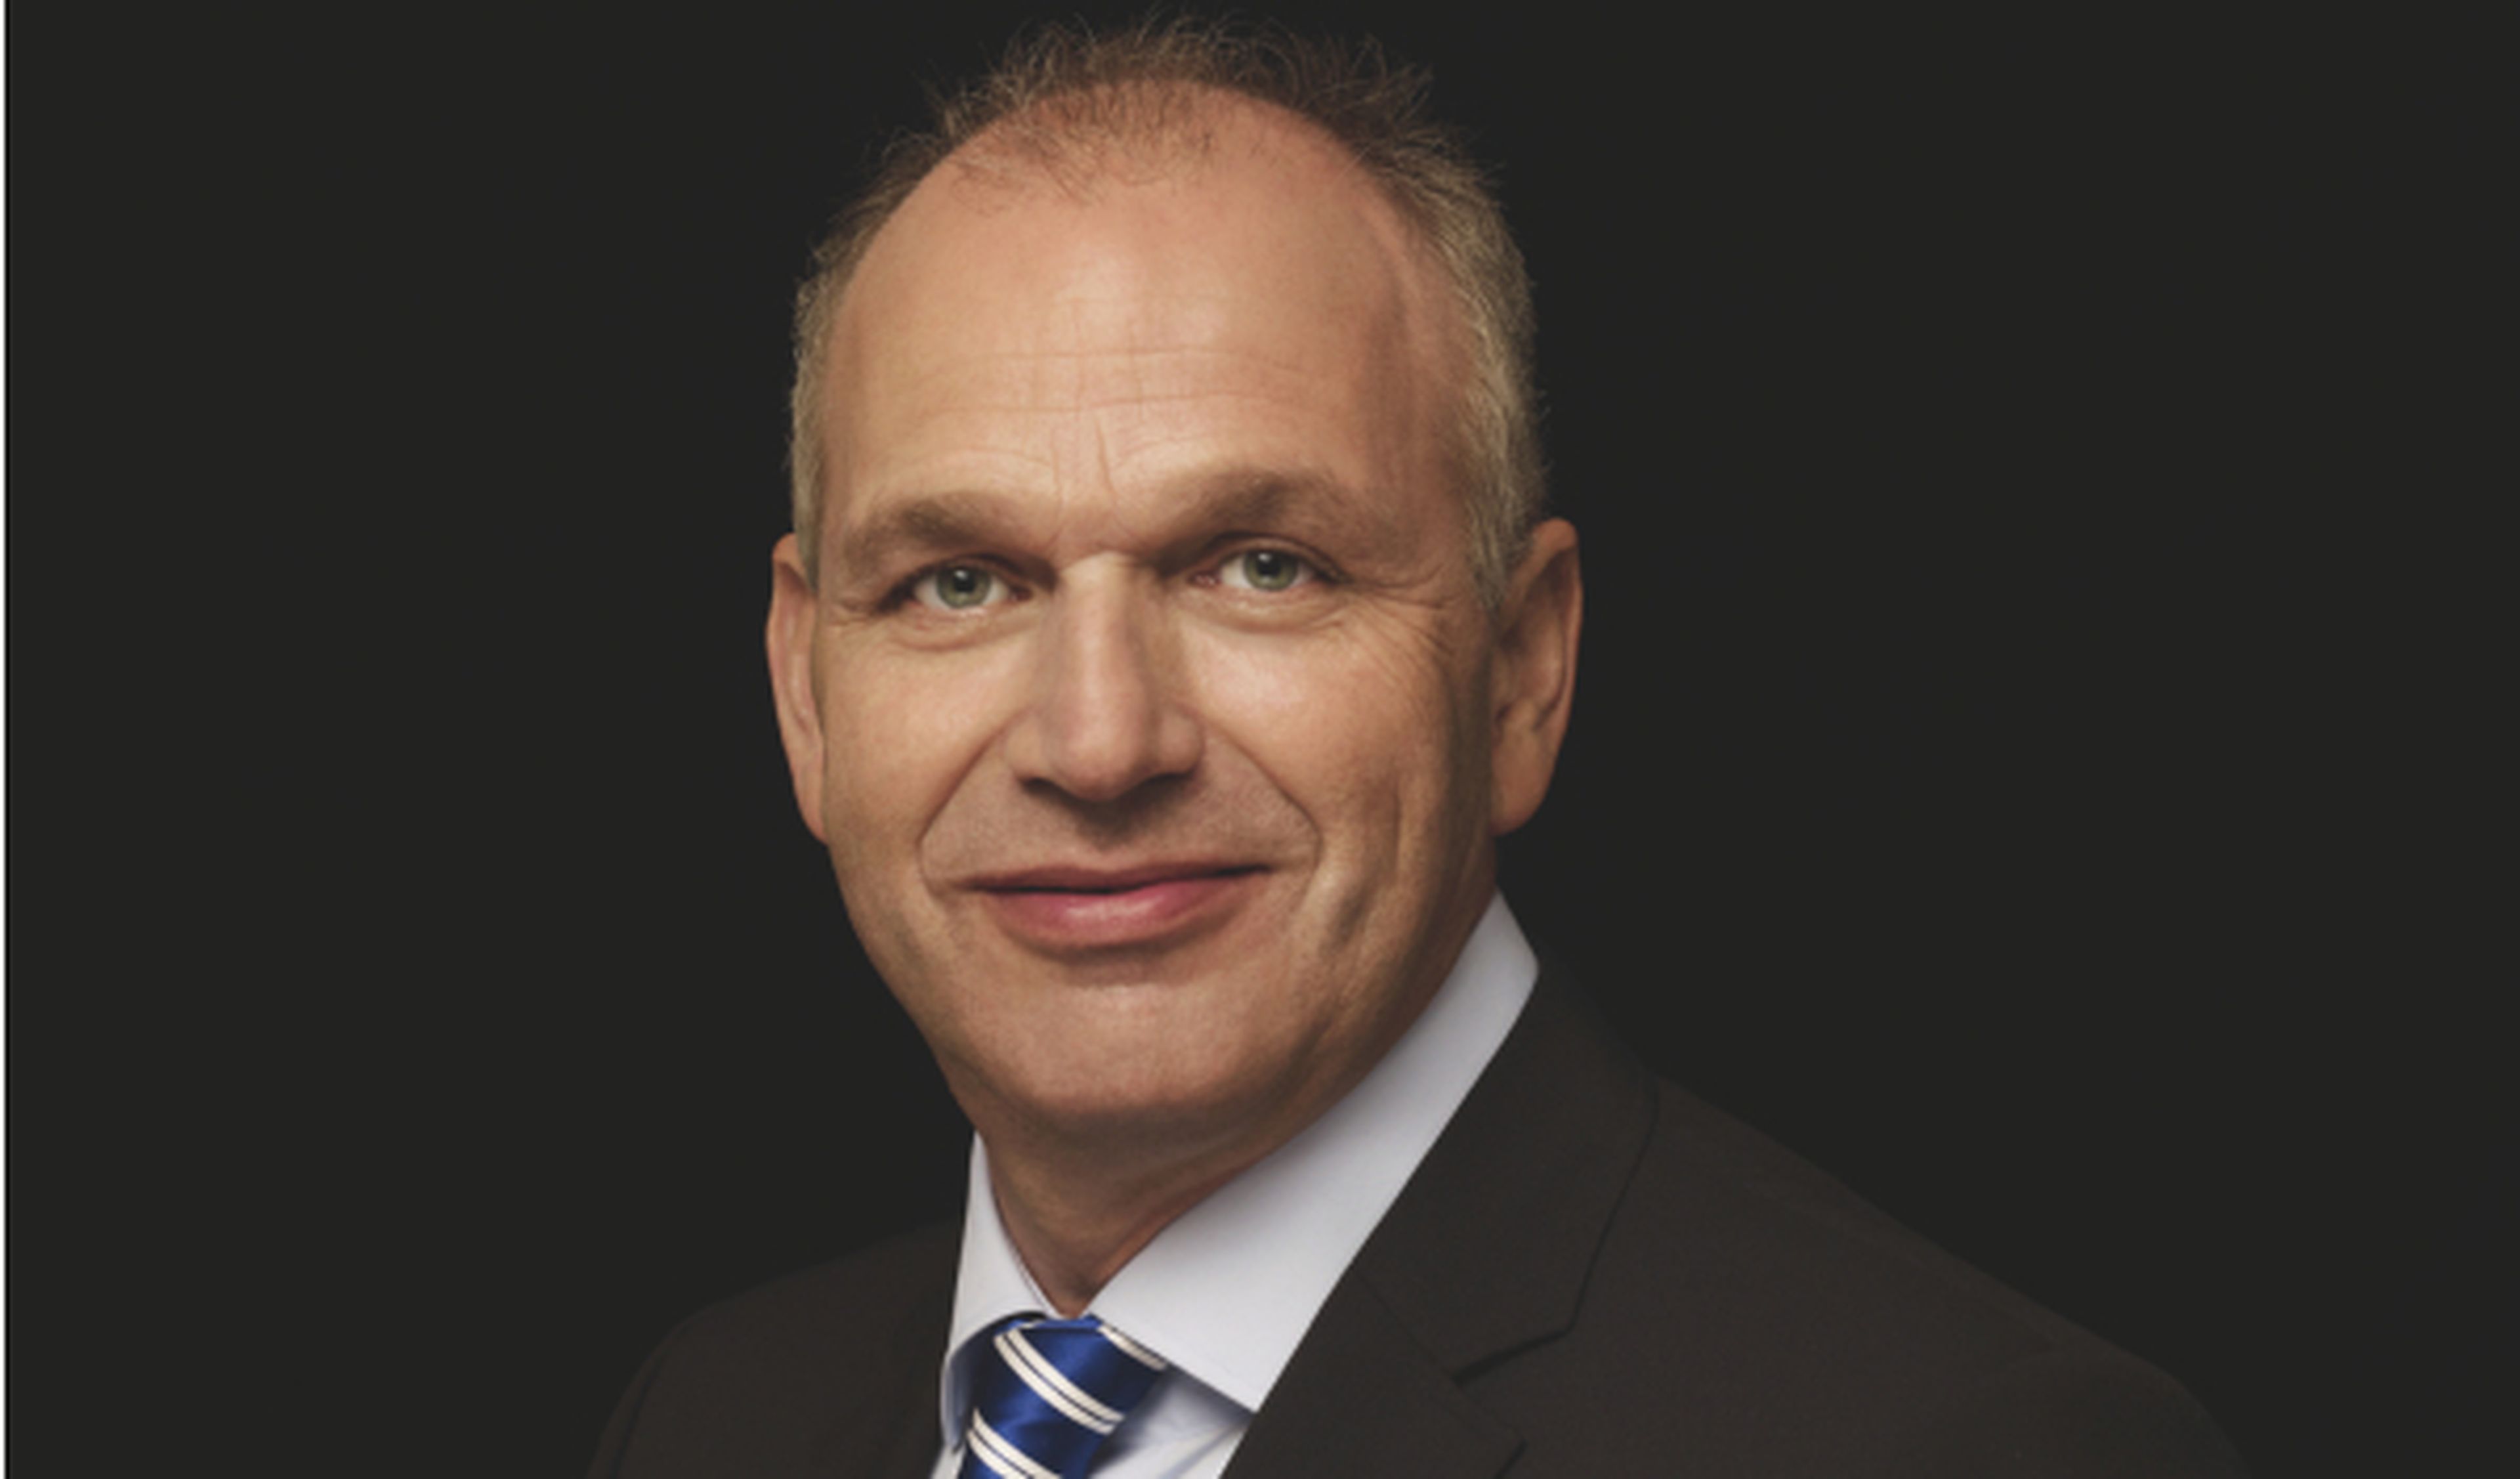 Jürgen Stackmann asume la presidencia de Seat